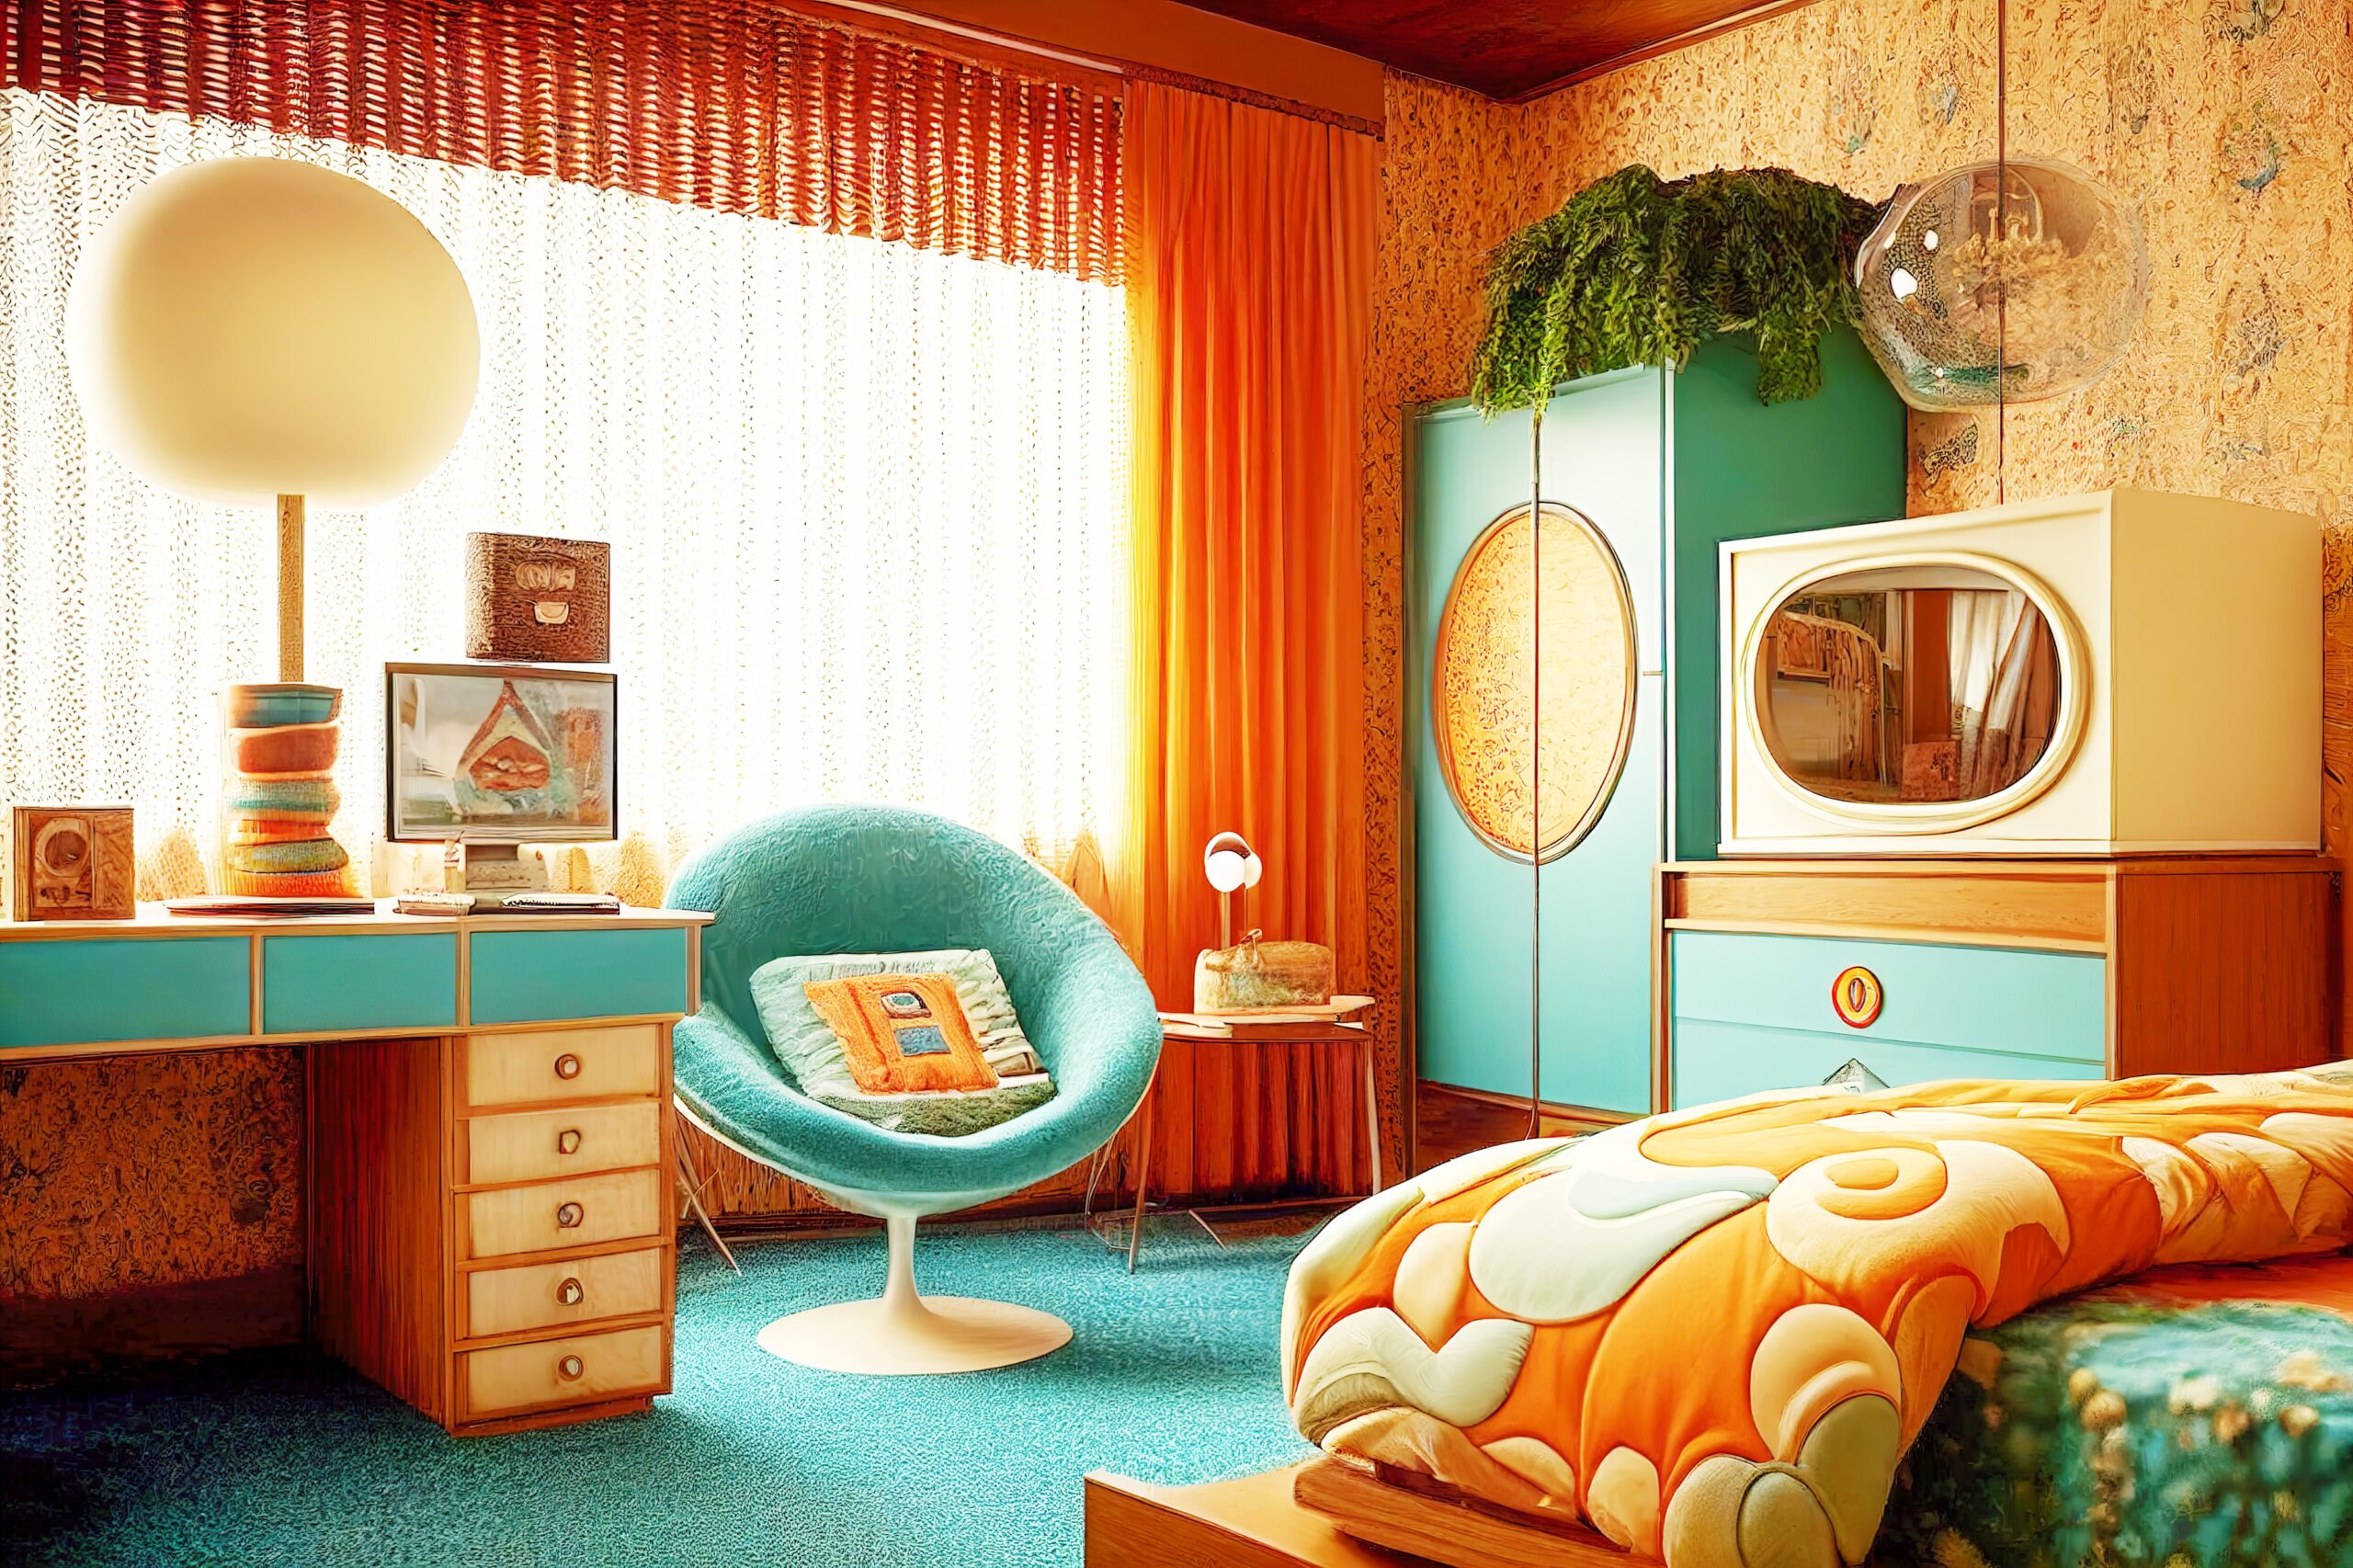 <img src="orange.jpg" alt="orange 70s bedroom style"/> 